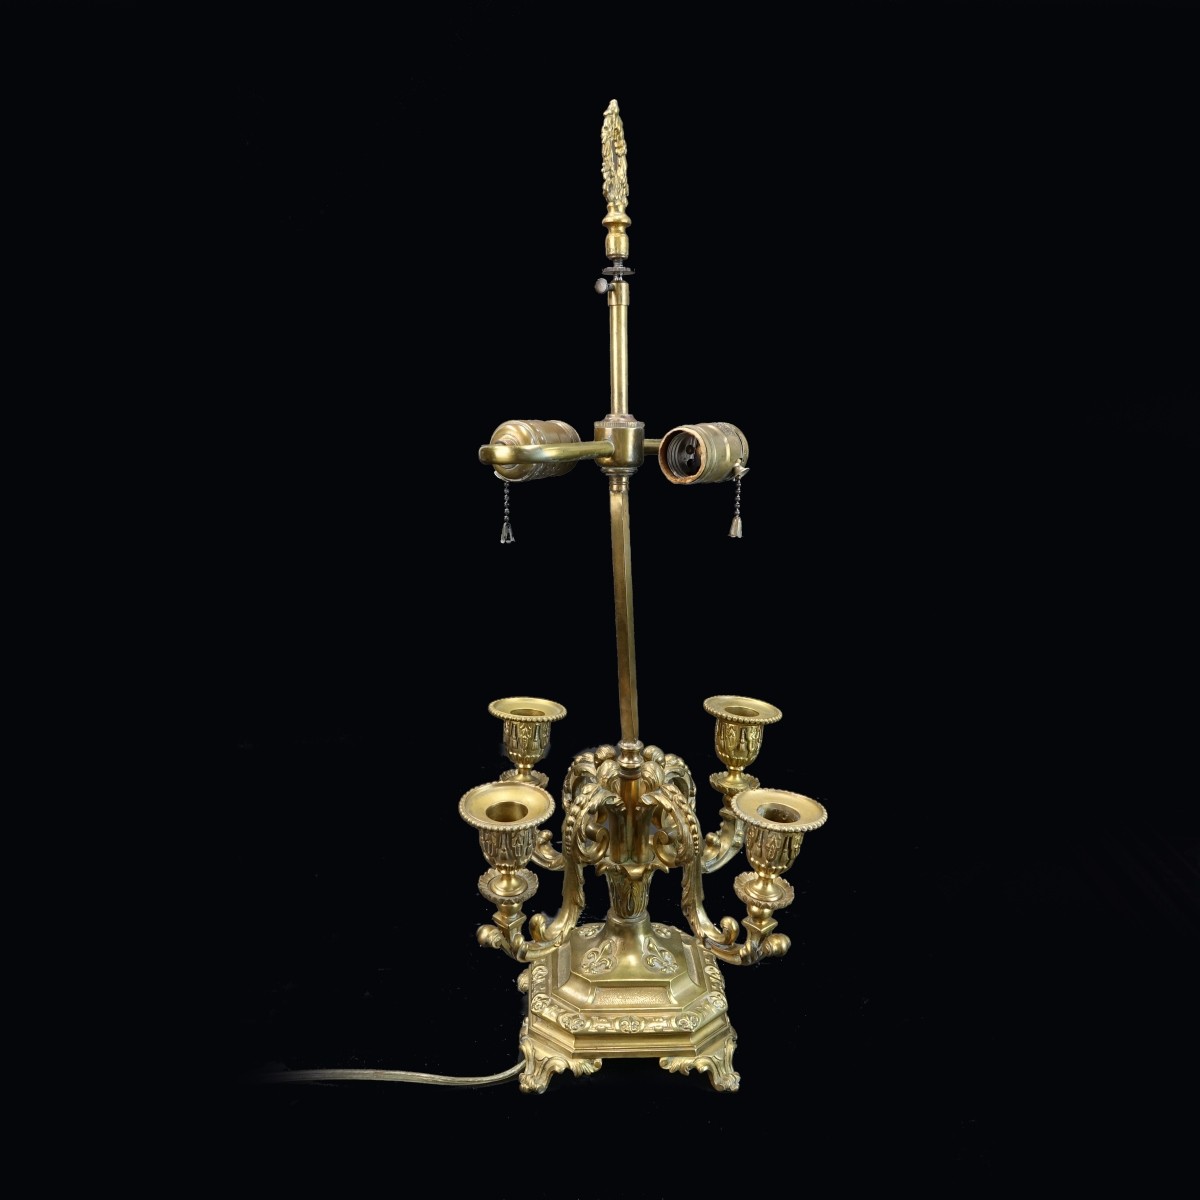 Vintage French Bouillotte Lamp